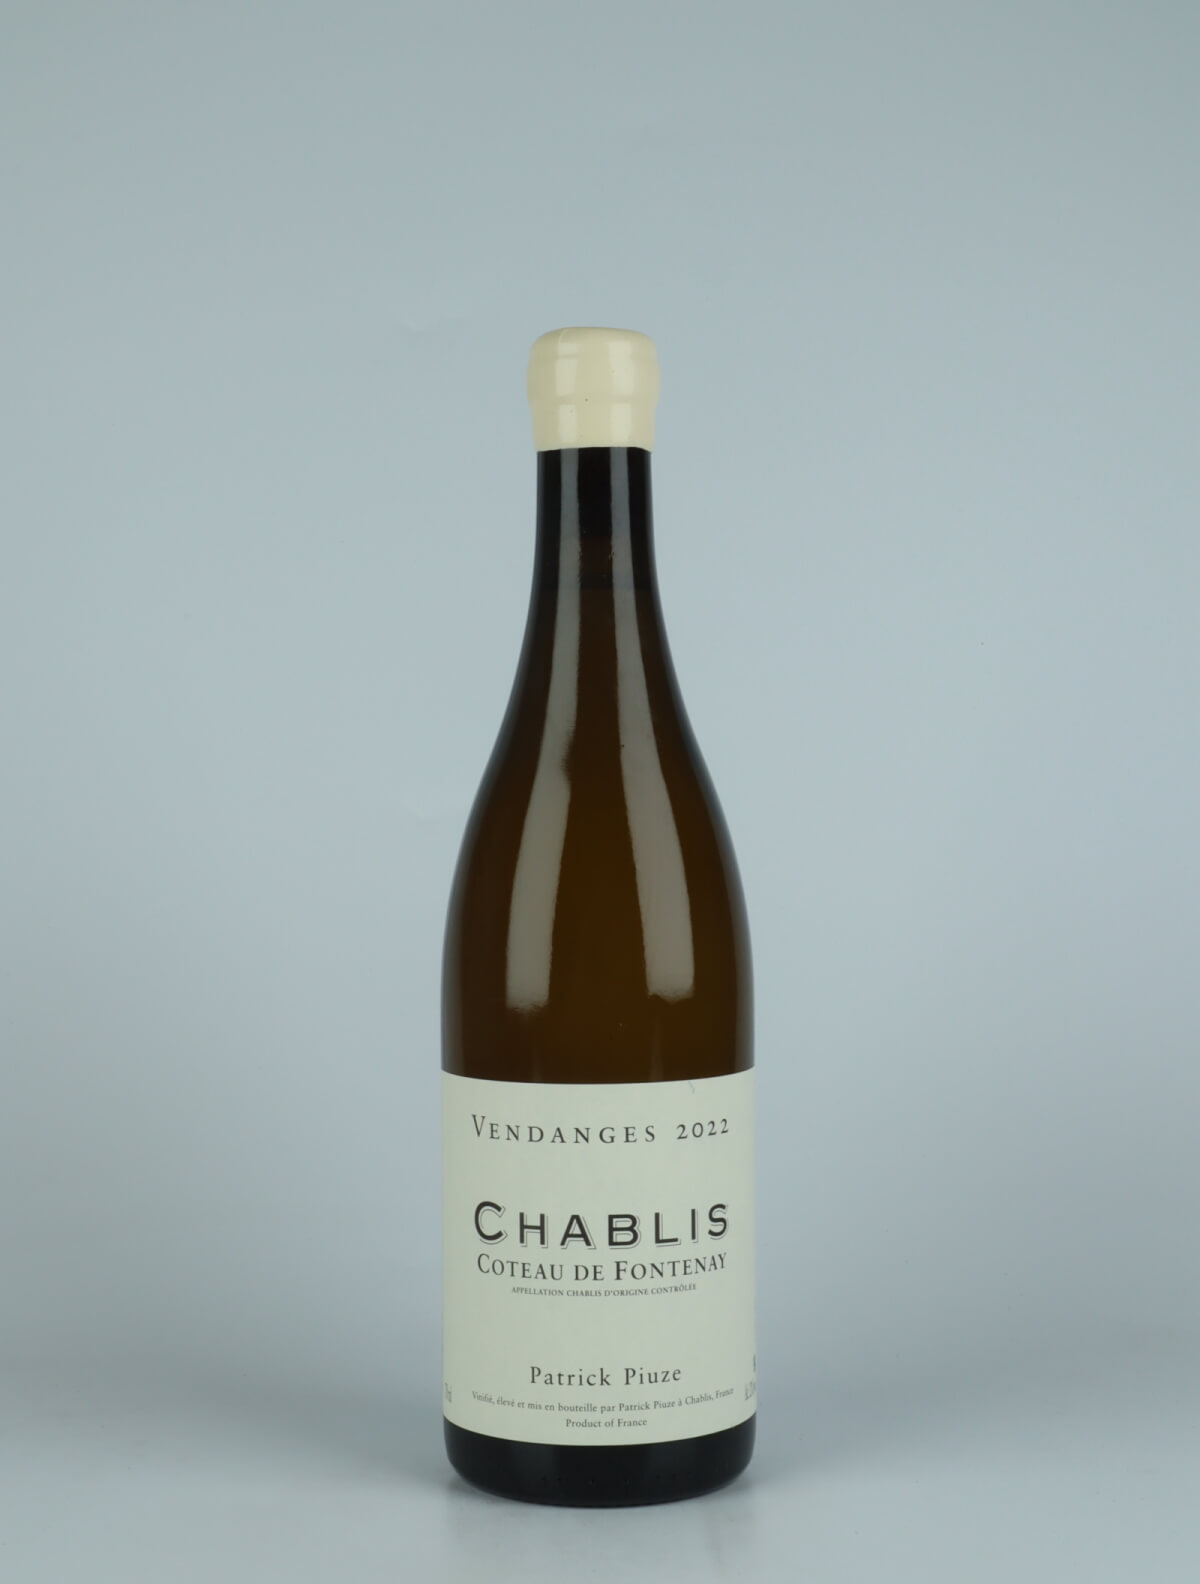 A bottle 2022 Chablis - Coteau de Fontenay White wine from Patrick Piuze, Burgundy in France